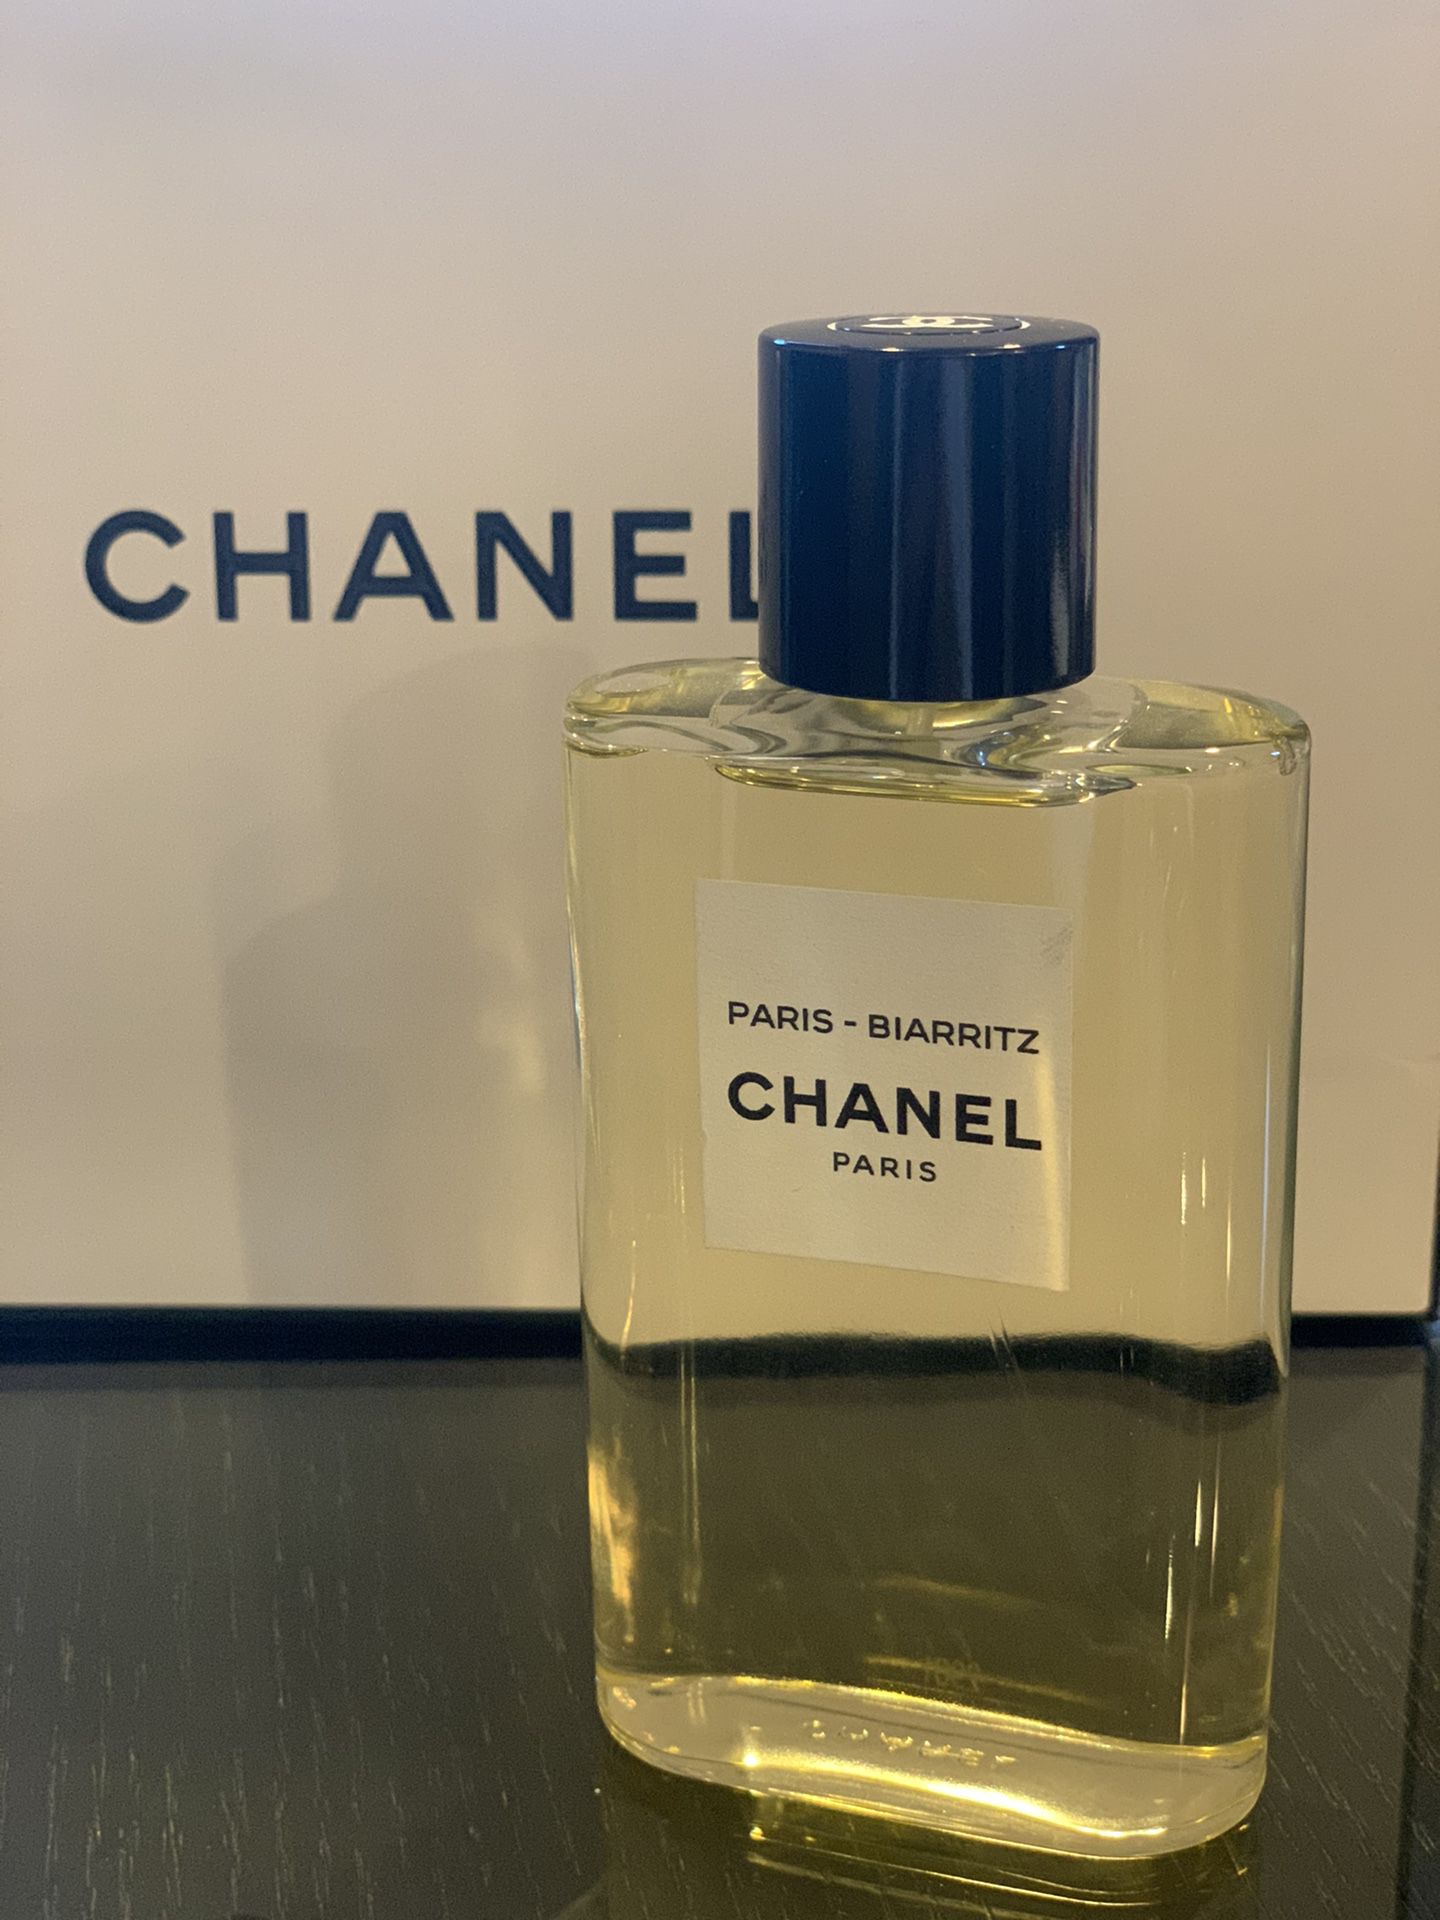 Chanel Biarritz Paris for Sale in Valencia, CA - OfferUp